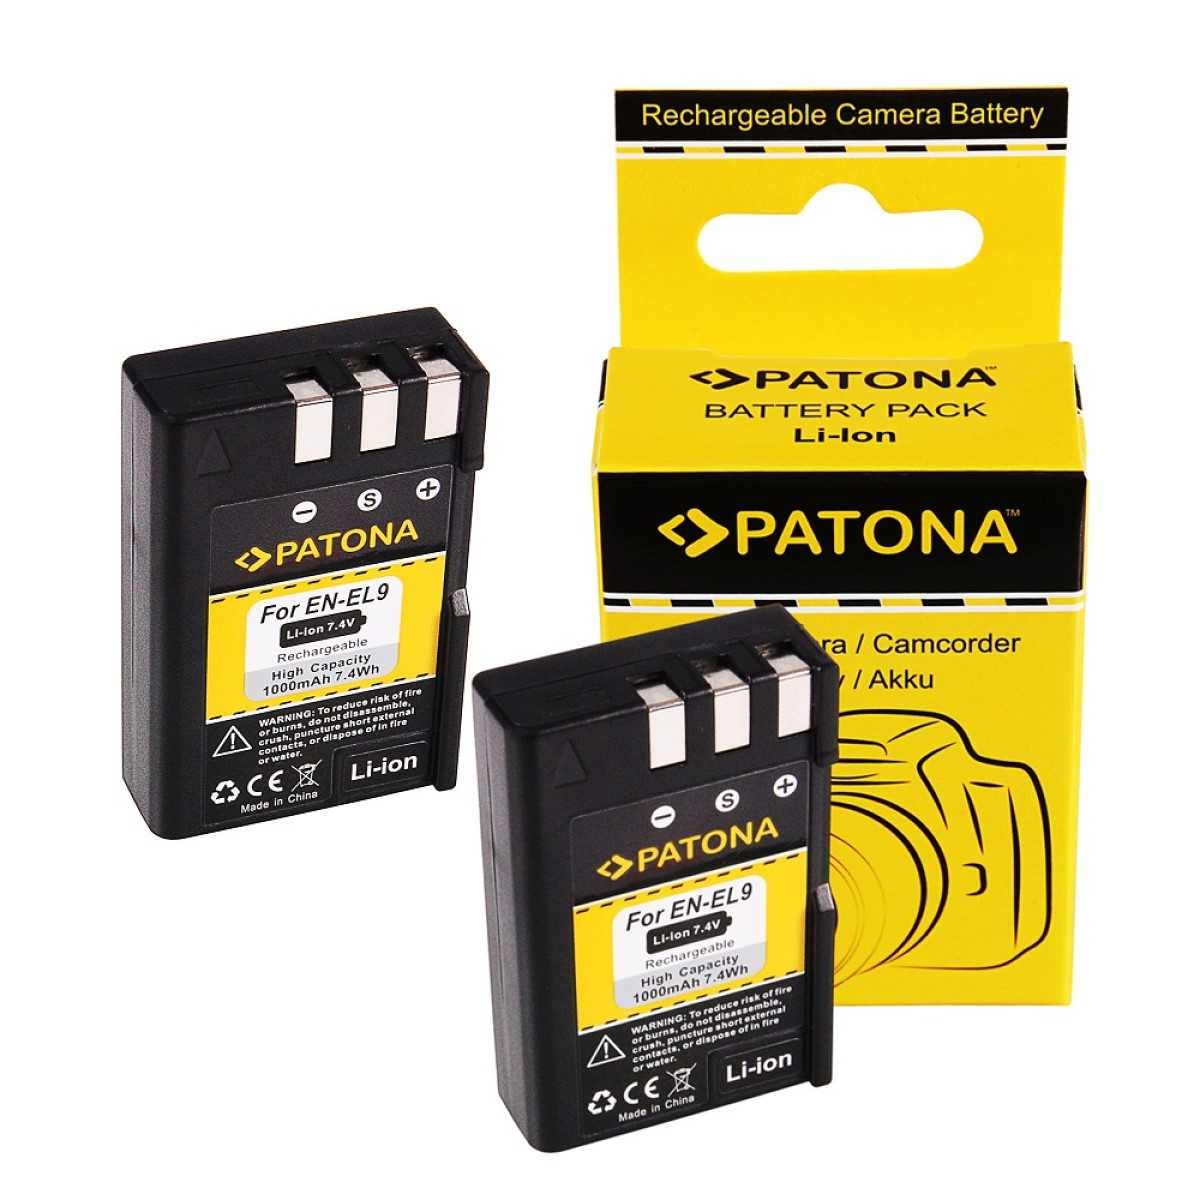 PATONA 2x Akku kompatibel für EN-EL9 Ersatzakku, Li-Ion Stück Nikon Volt, 1000mAh 7.4 2